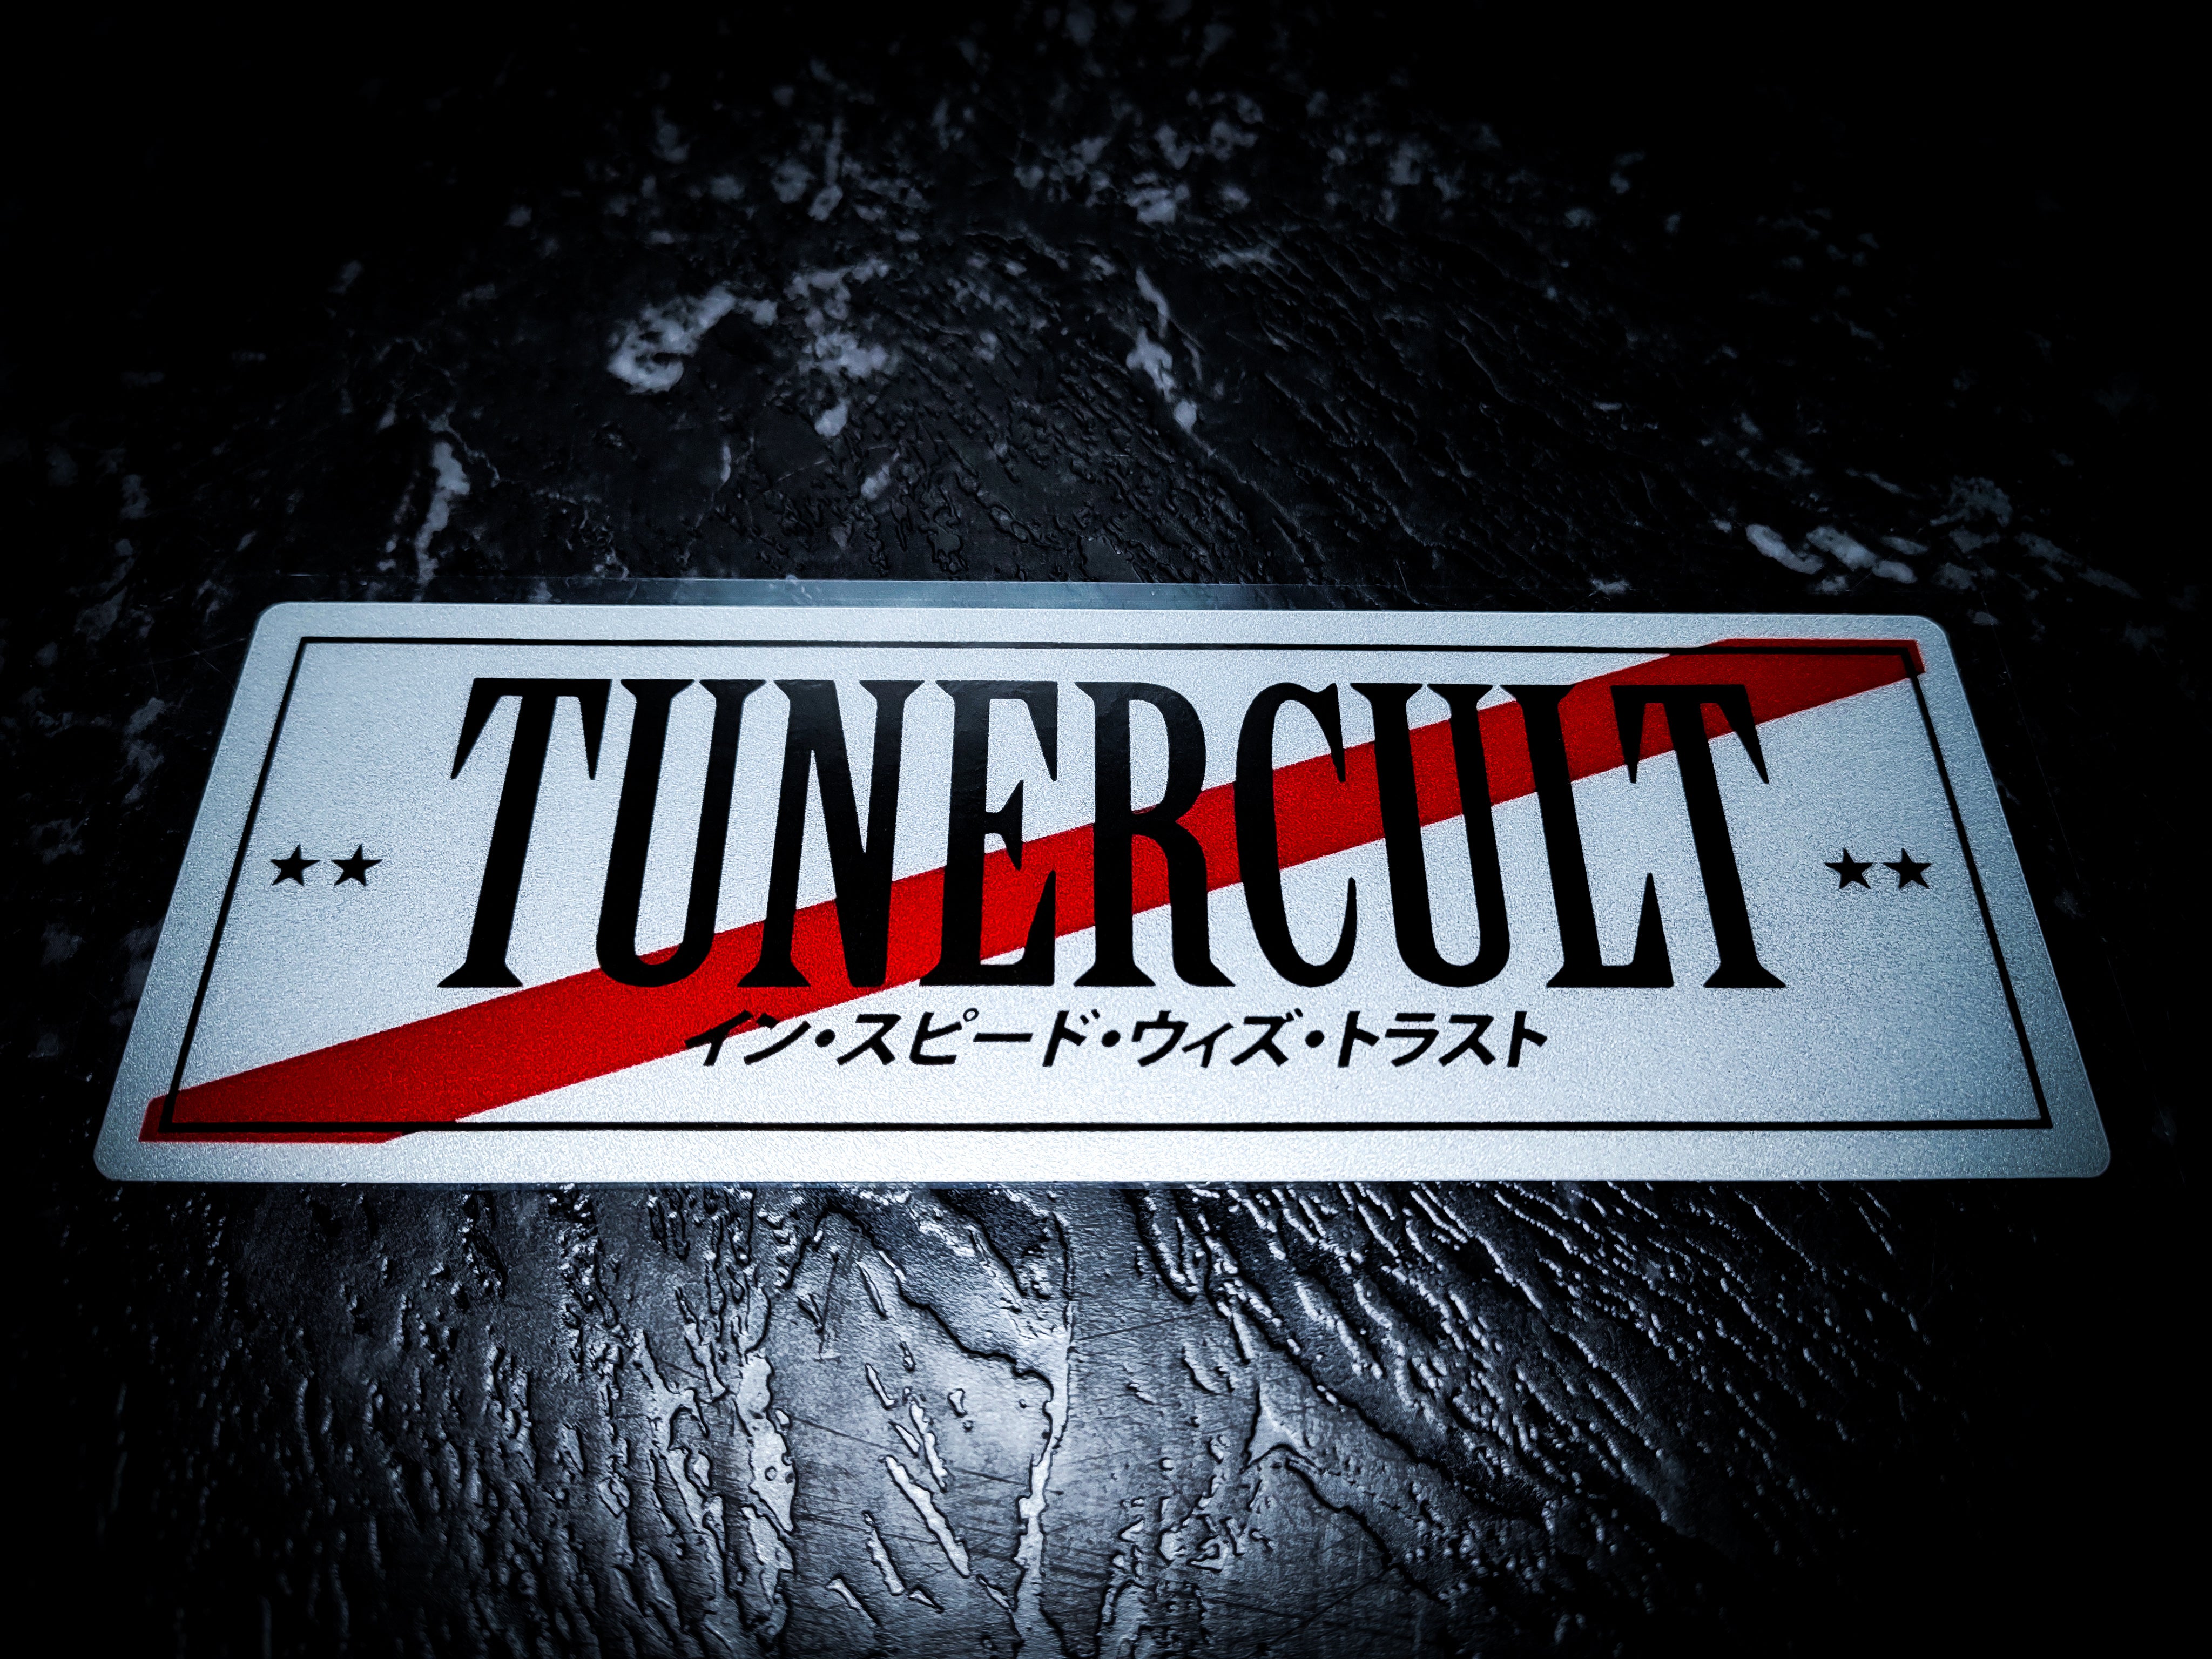 Tuner Cult Reflective Slap Sticker